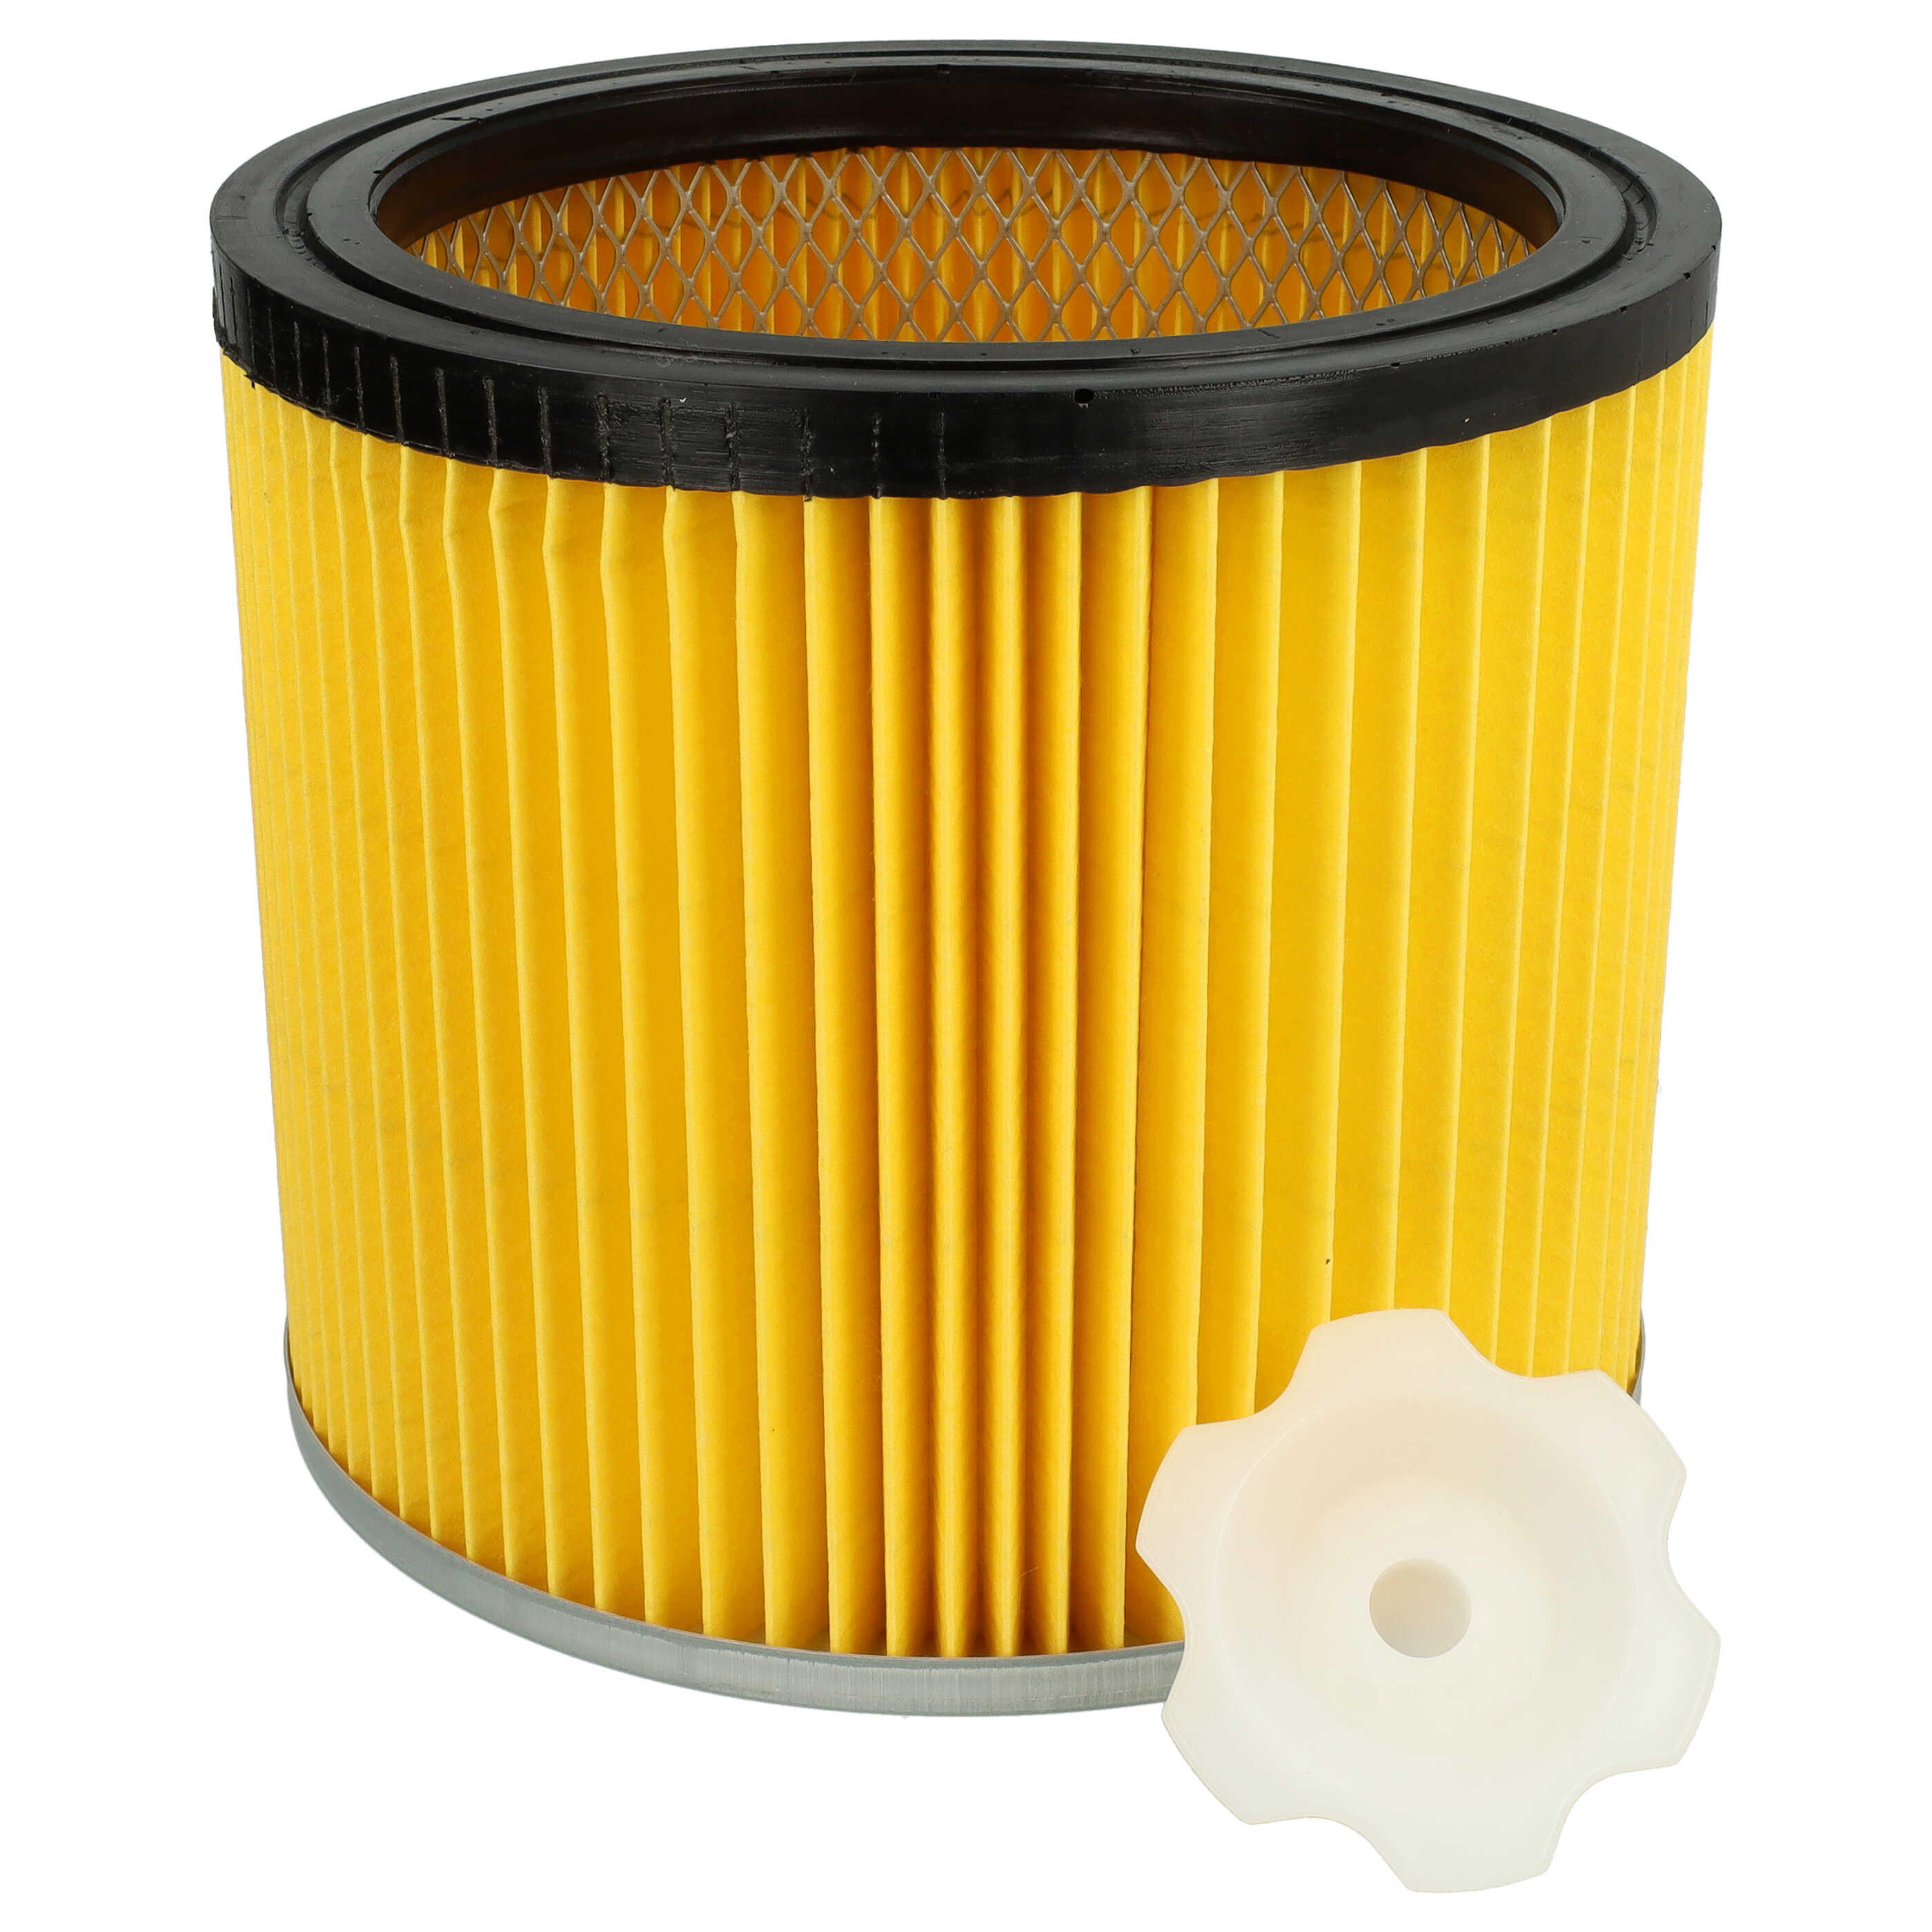 Filtro reemplaza Bosch 2 607 432 001, 2607432001 para aspiradora - filtro plisado, negro / plata / amarillo